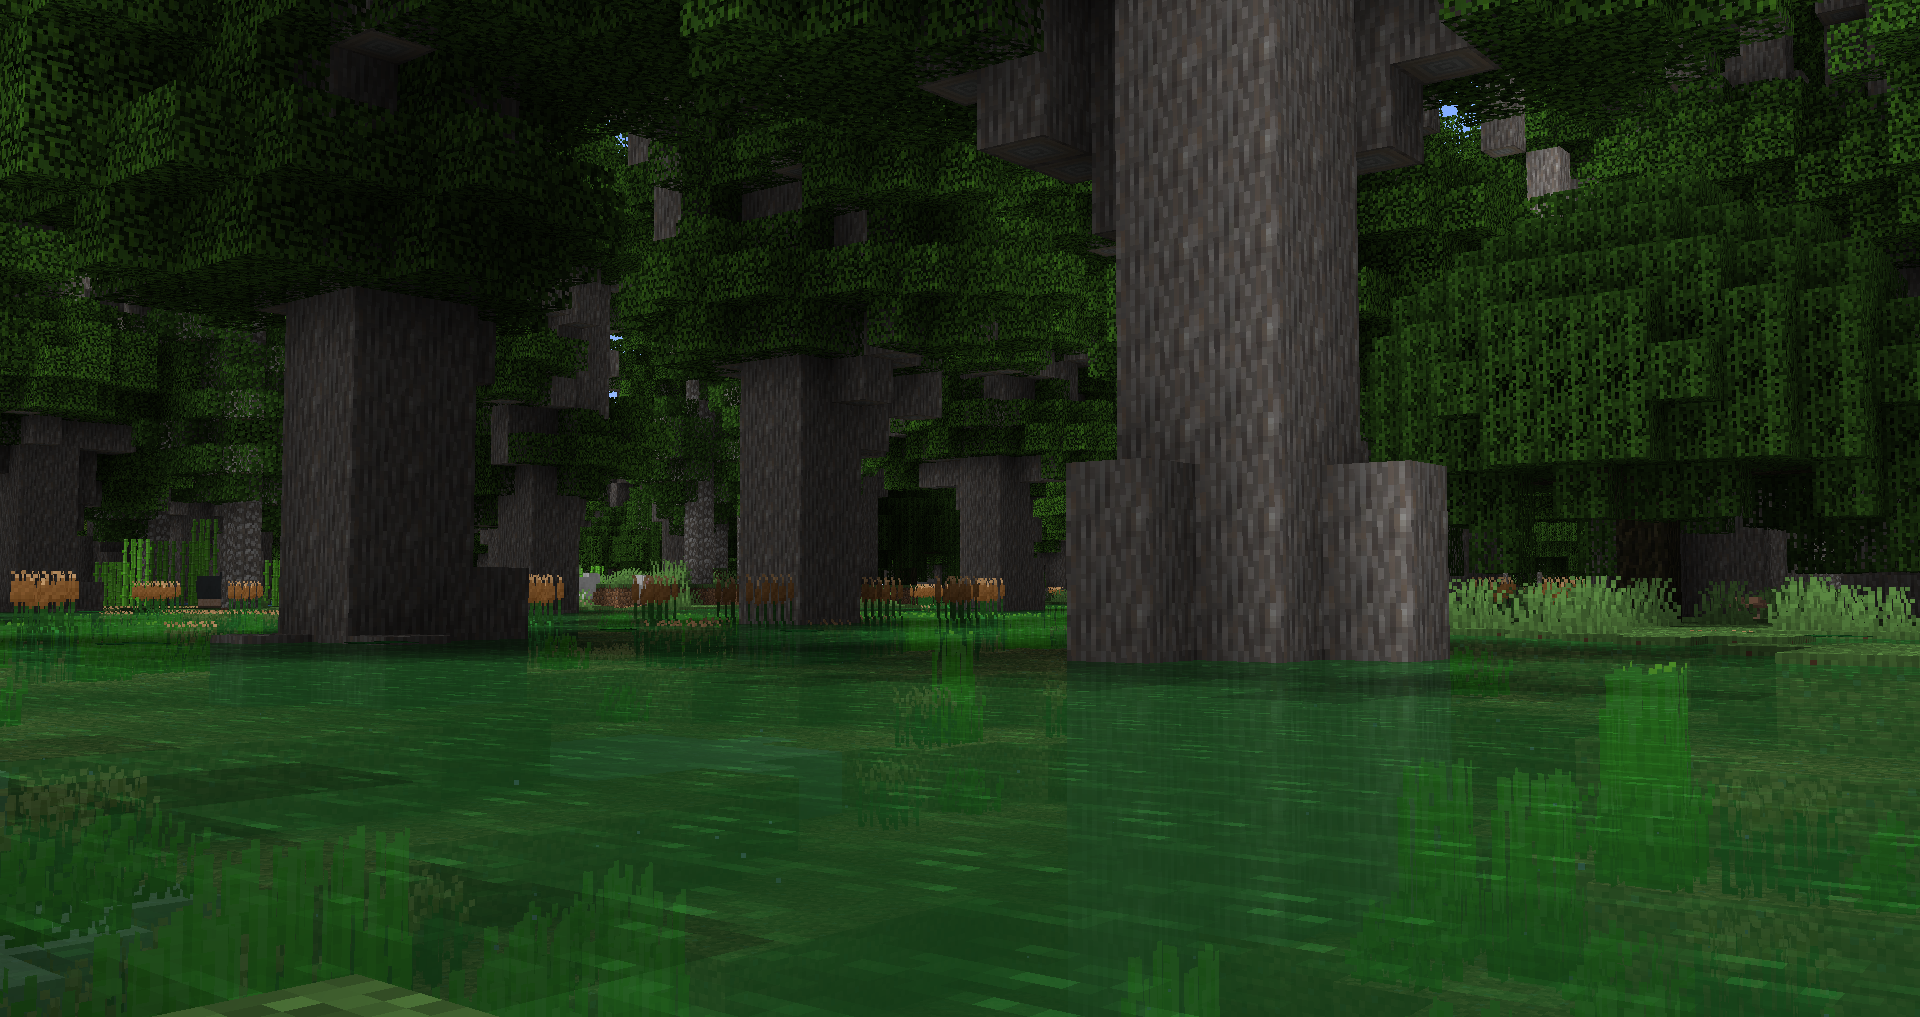 Cypress Swamp